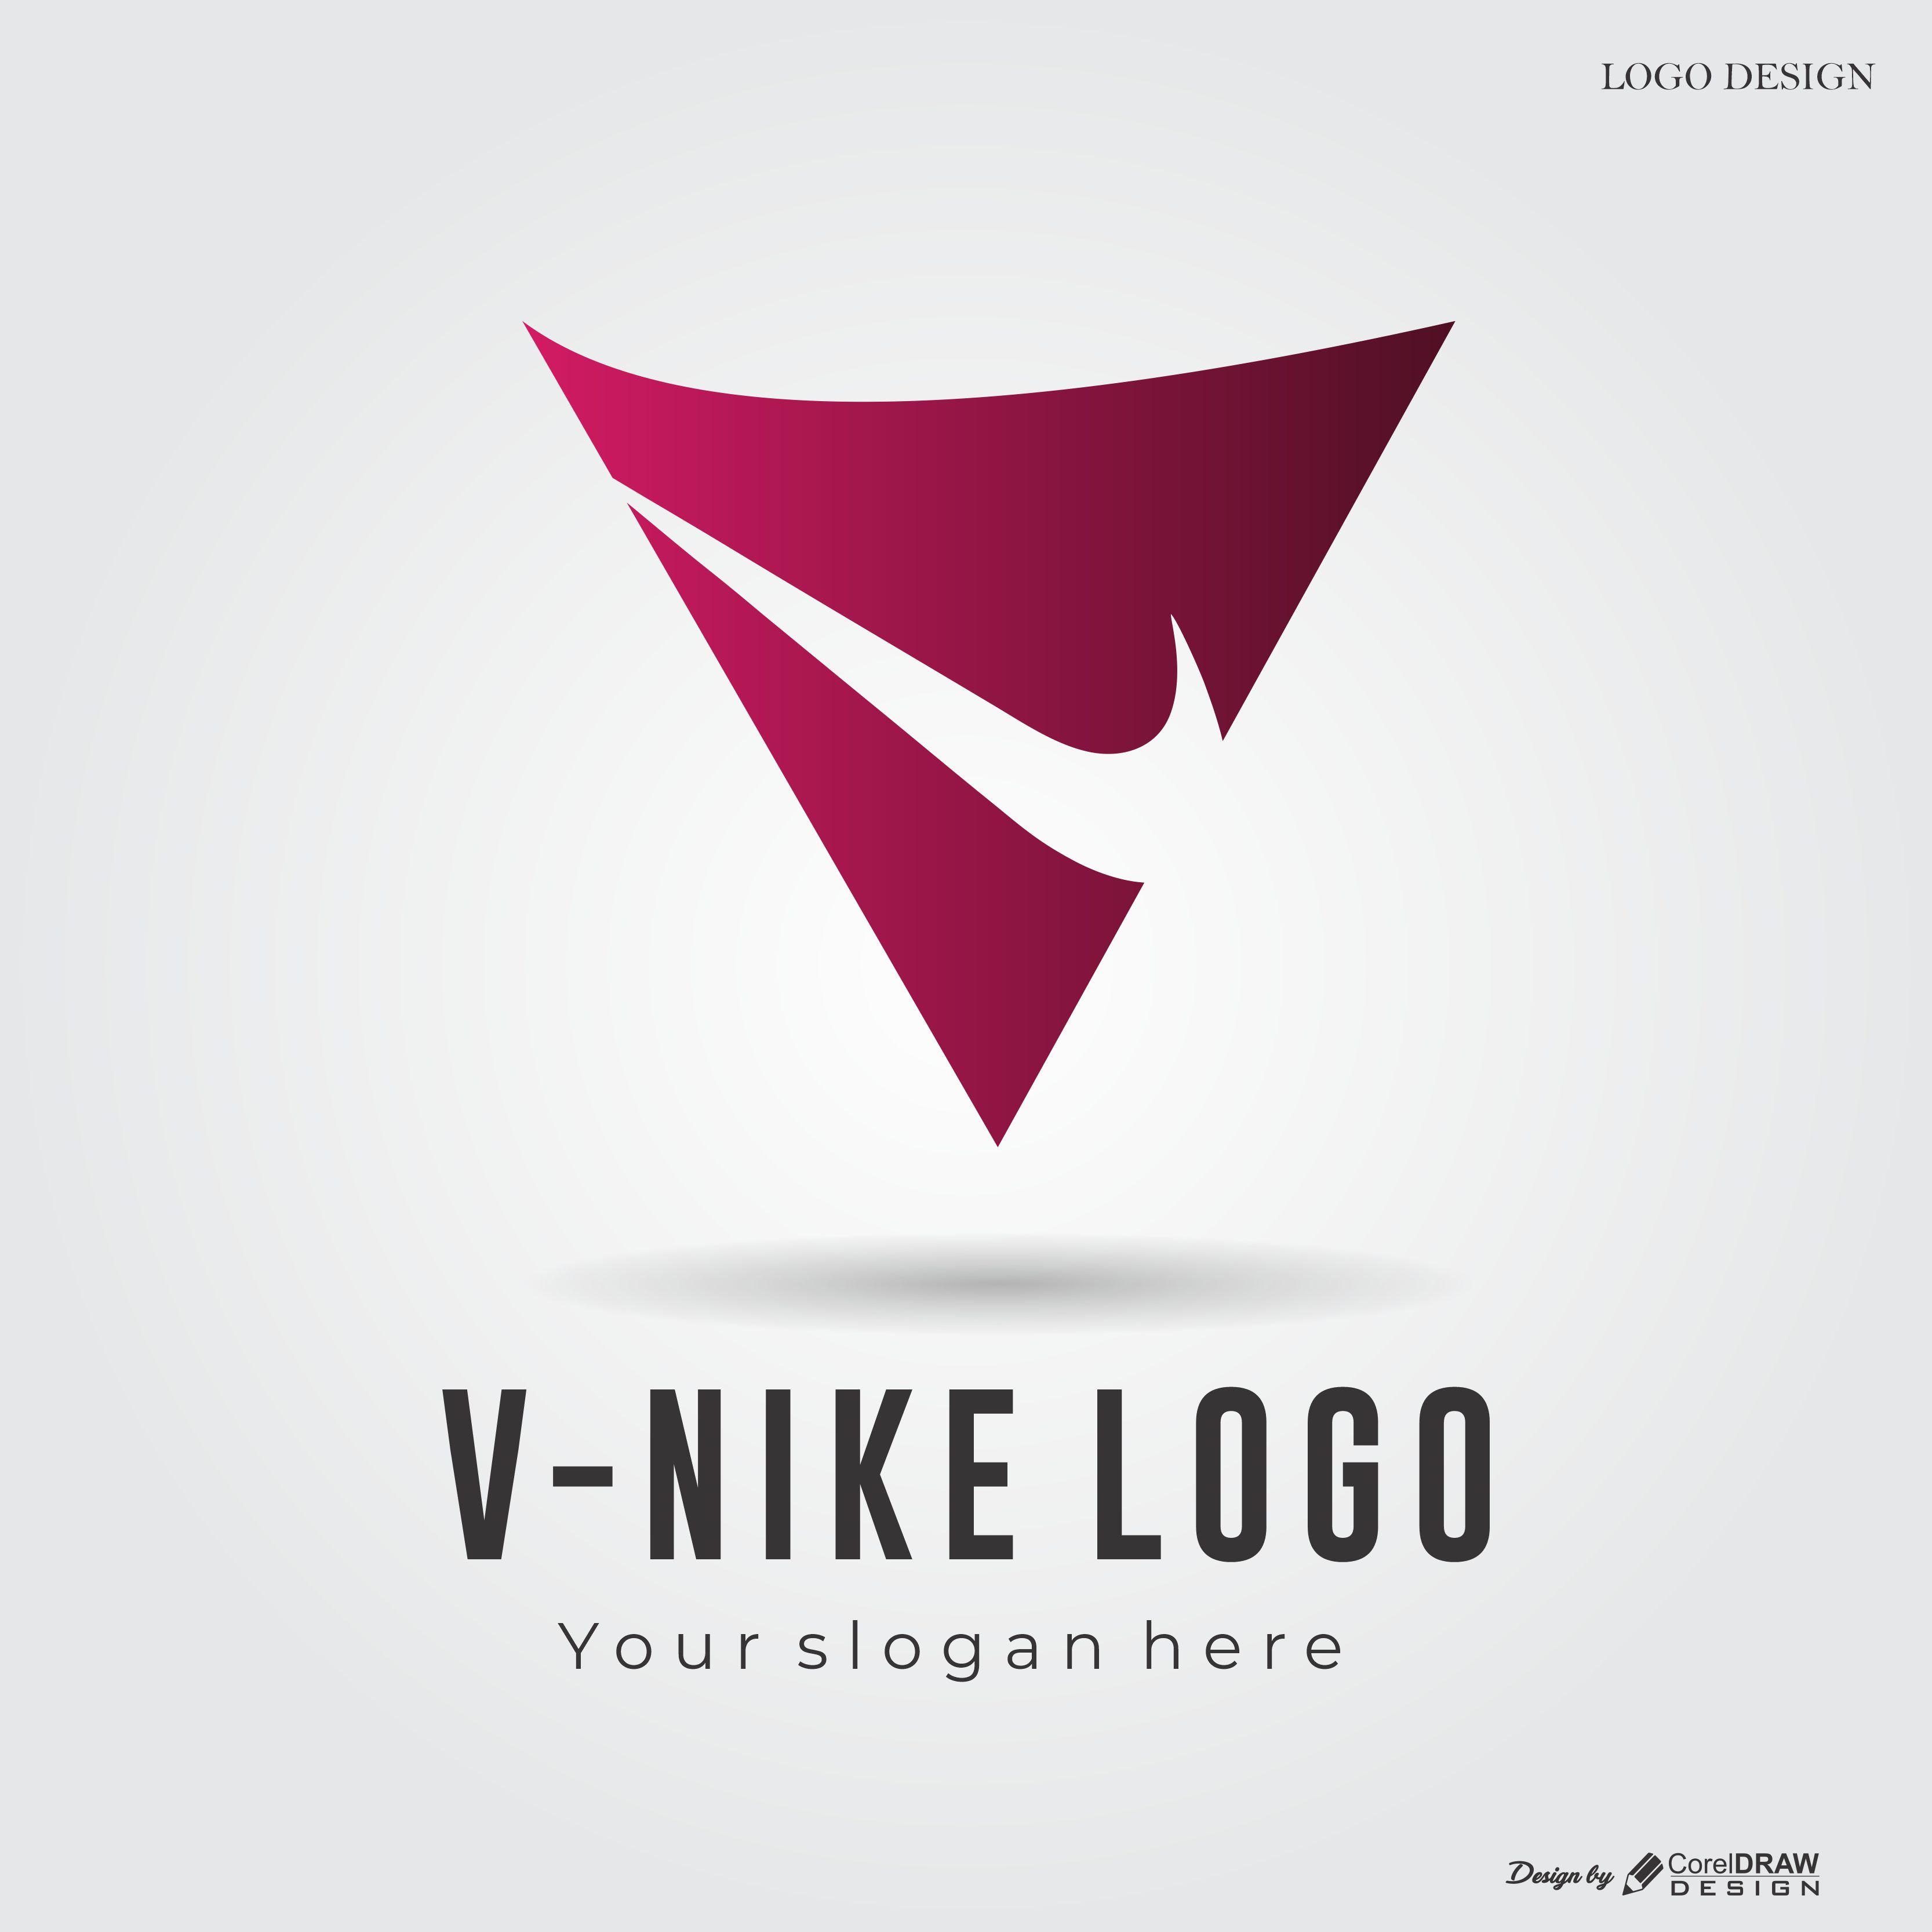 Design in corel draw, logo, banner, photo, flyer, vectoring by Hrant77 |  Fiverr